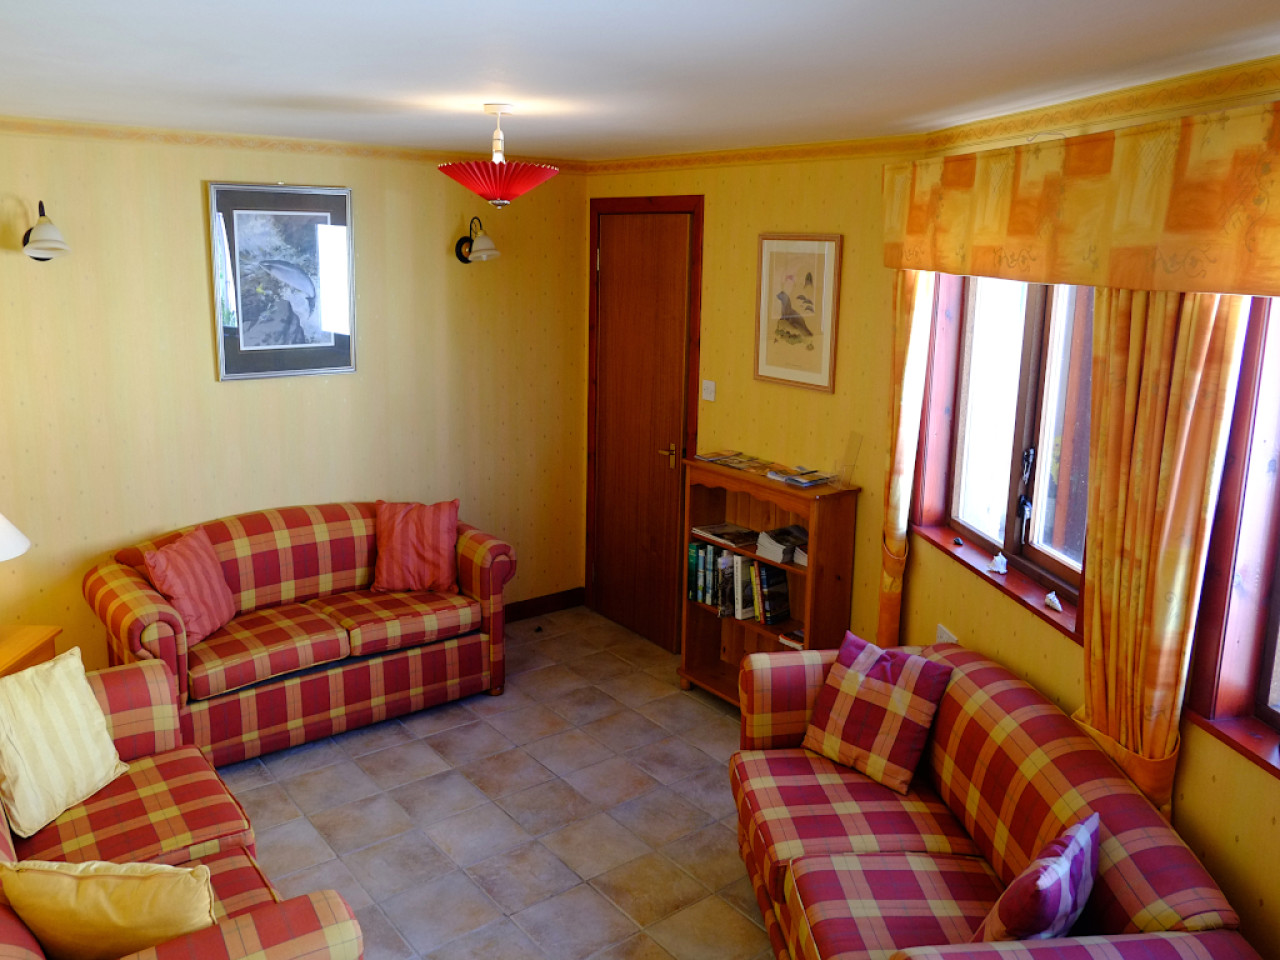 Sitting Room, Gord Guest House, Fetlar, Shetland.